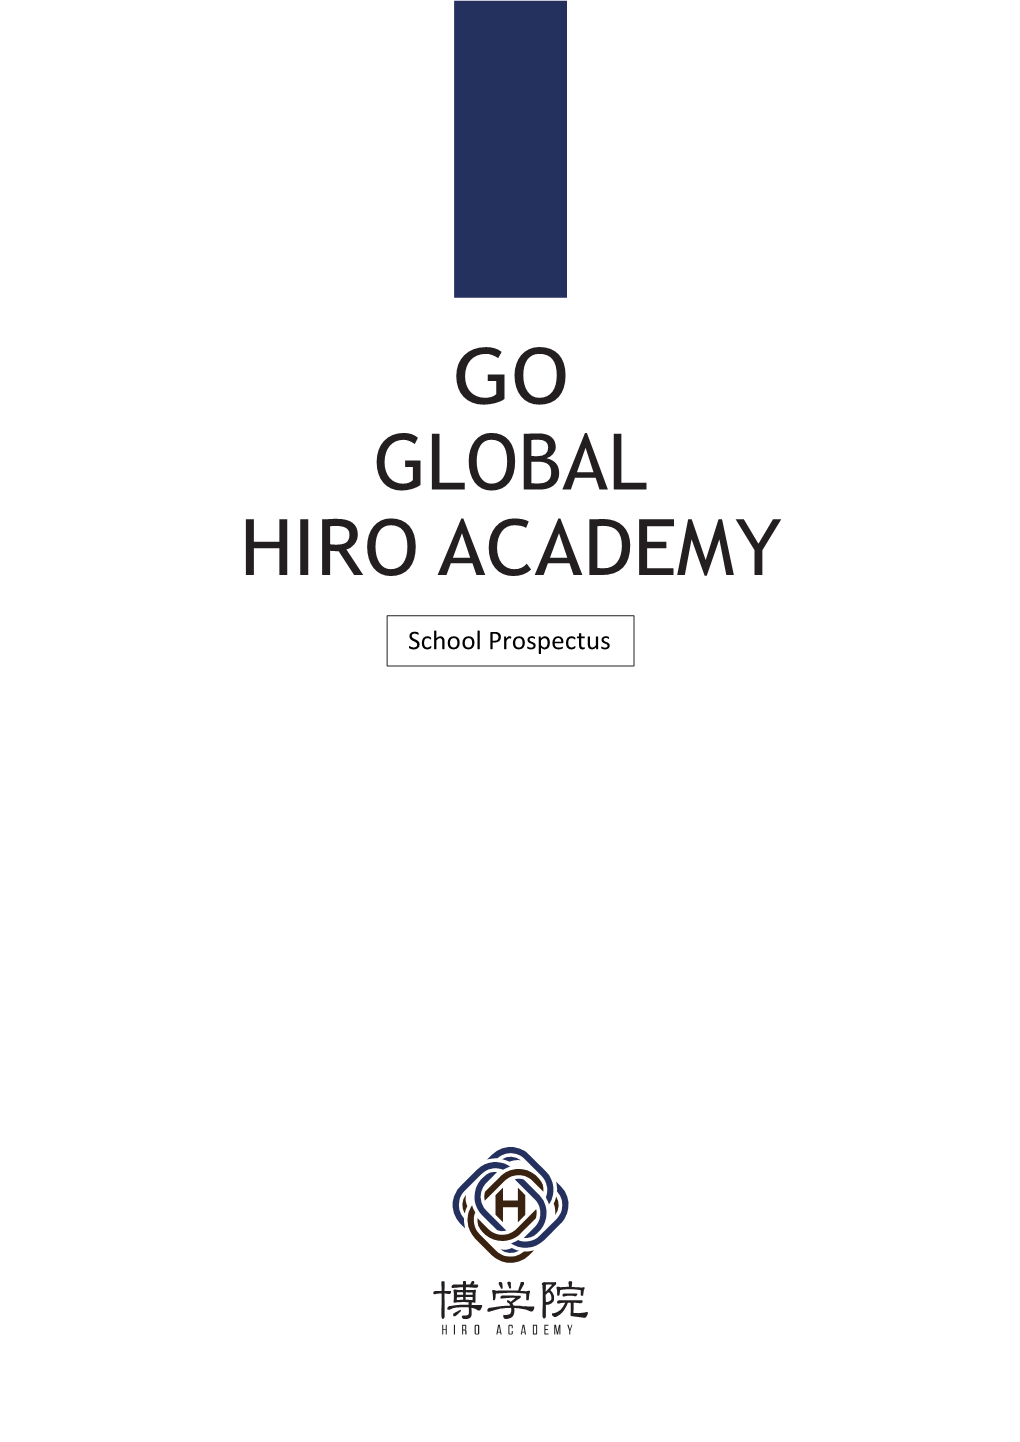 Go Global Hiro Academy